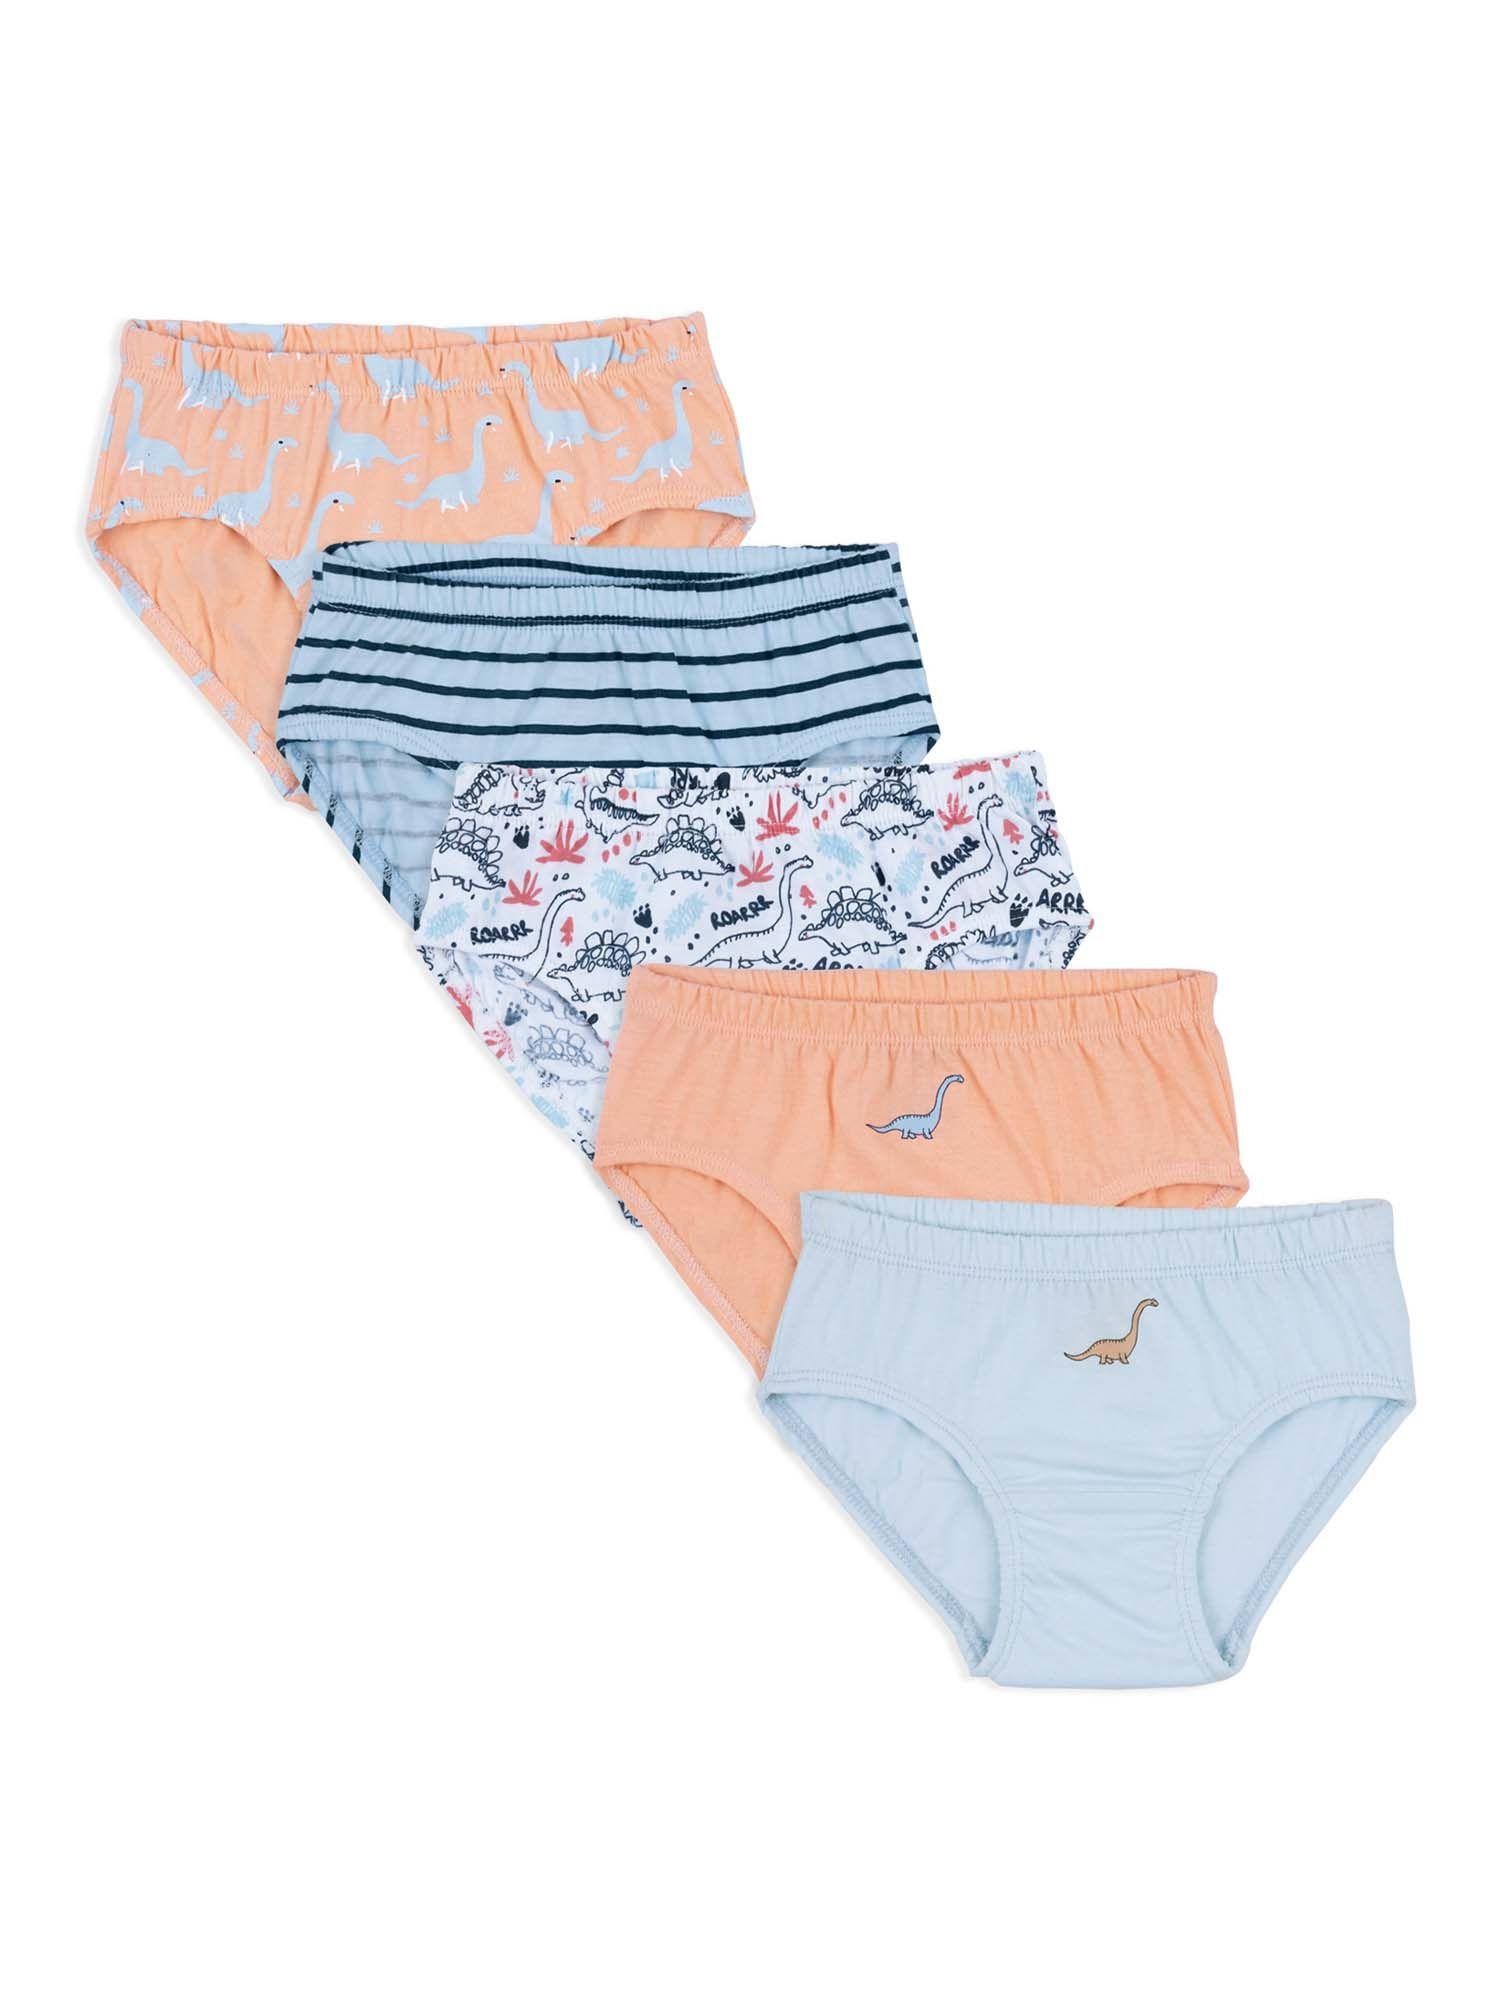 girls cotton graphic printed panties underwear innerwear multicolor (pack of 5)